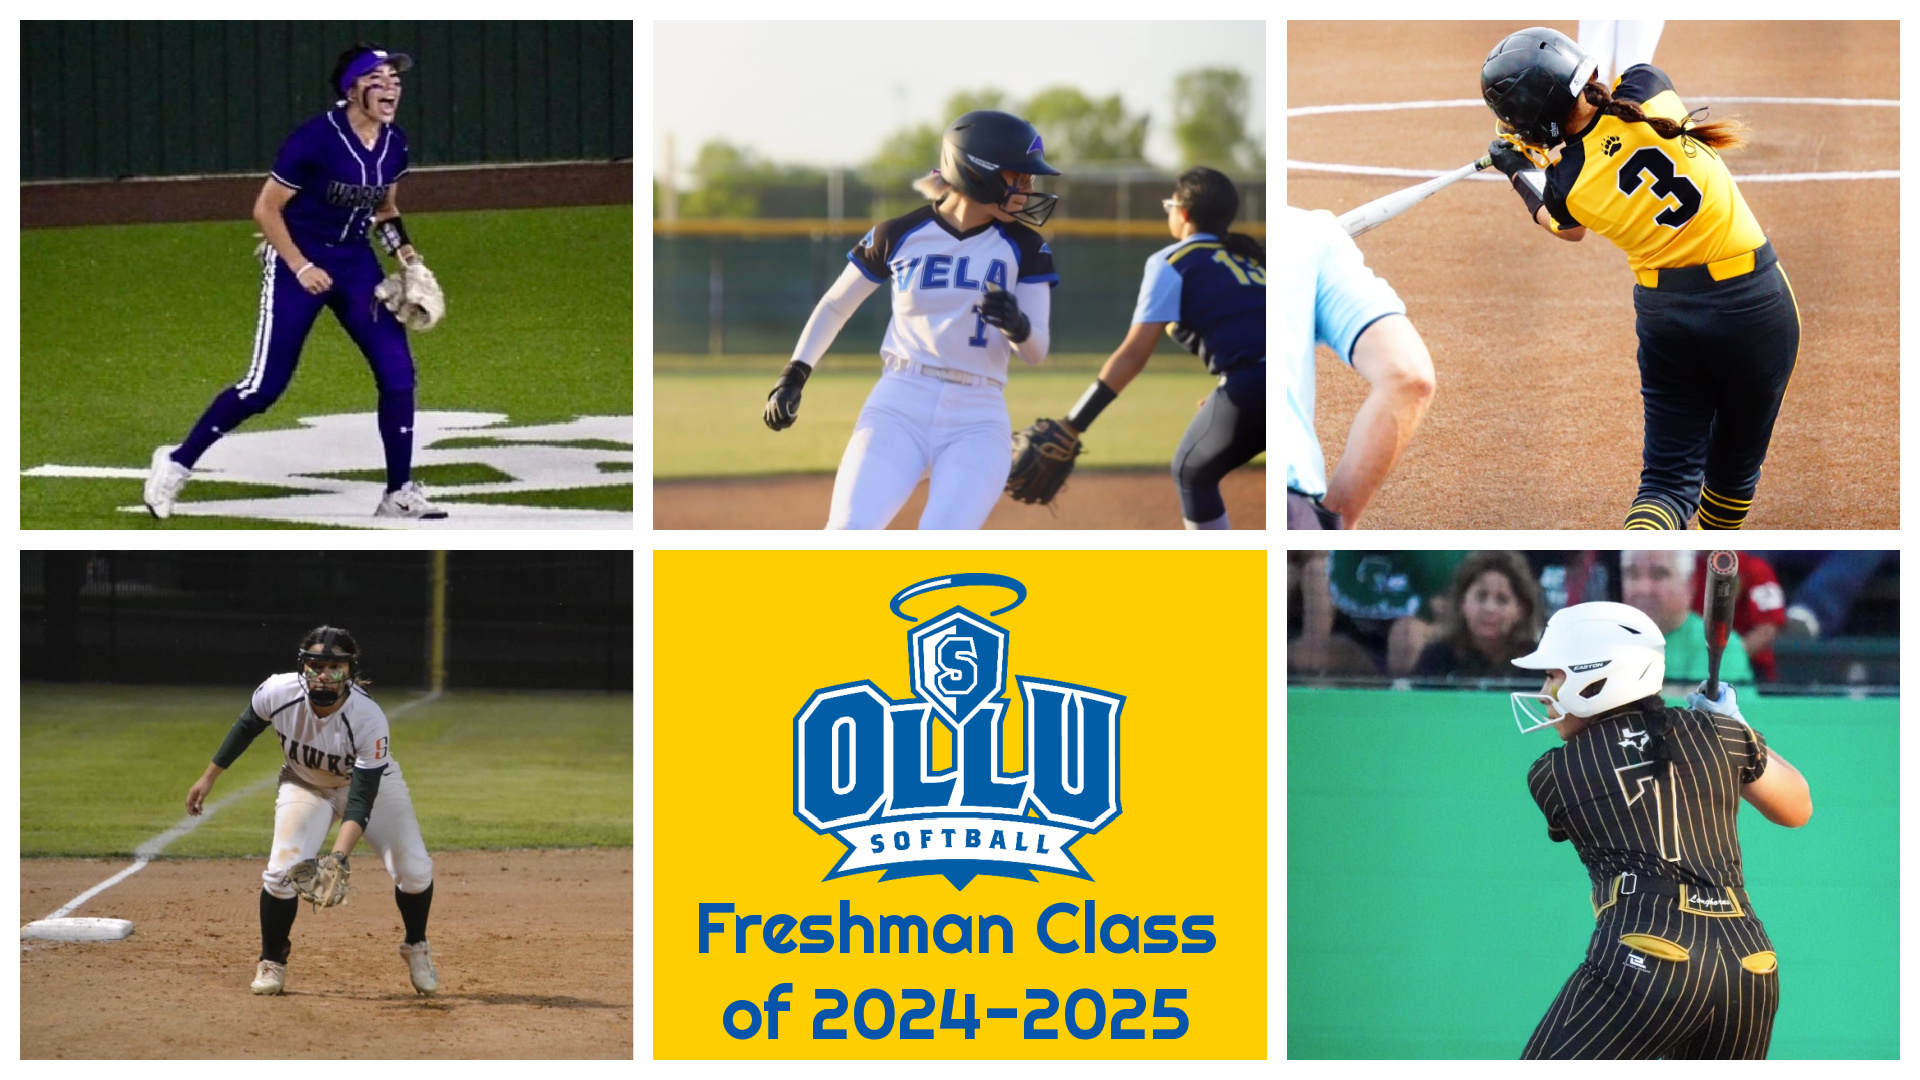 OLLU Softball Announces the Freshman Class of 2024-2025